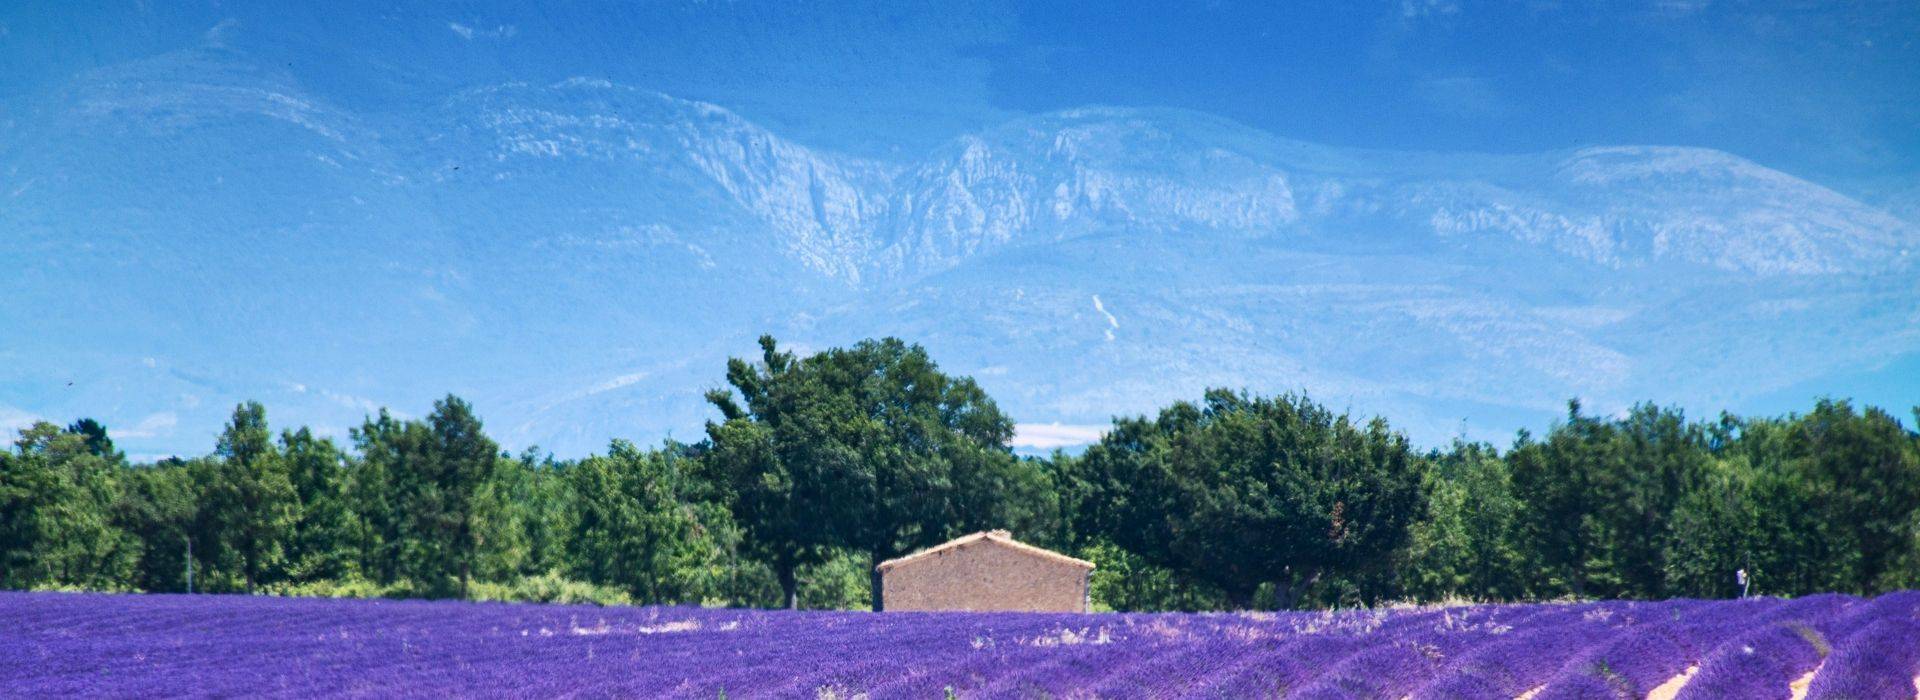 Provence_France_Pixabay.jpg